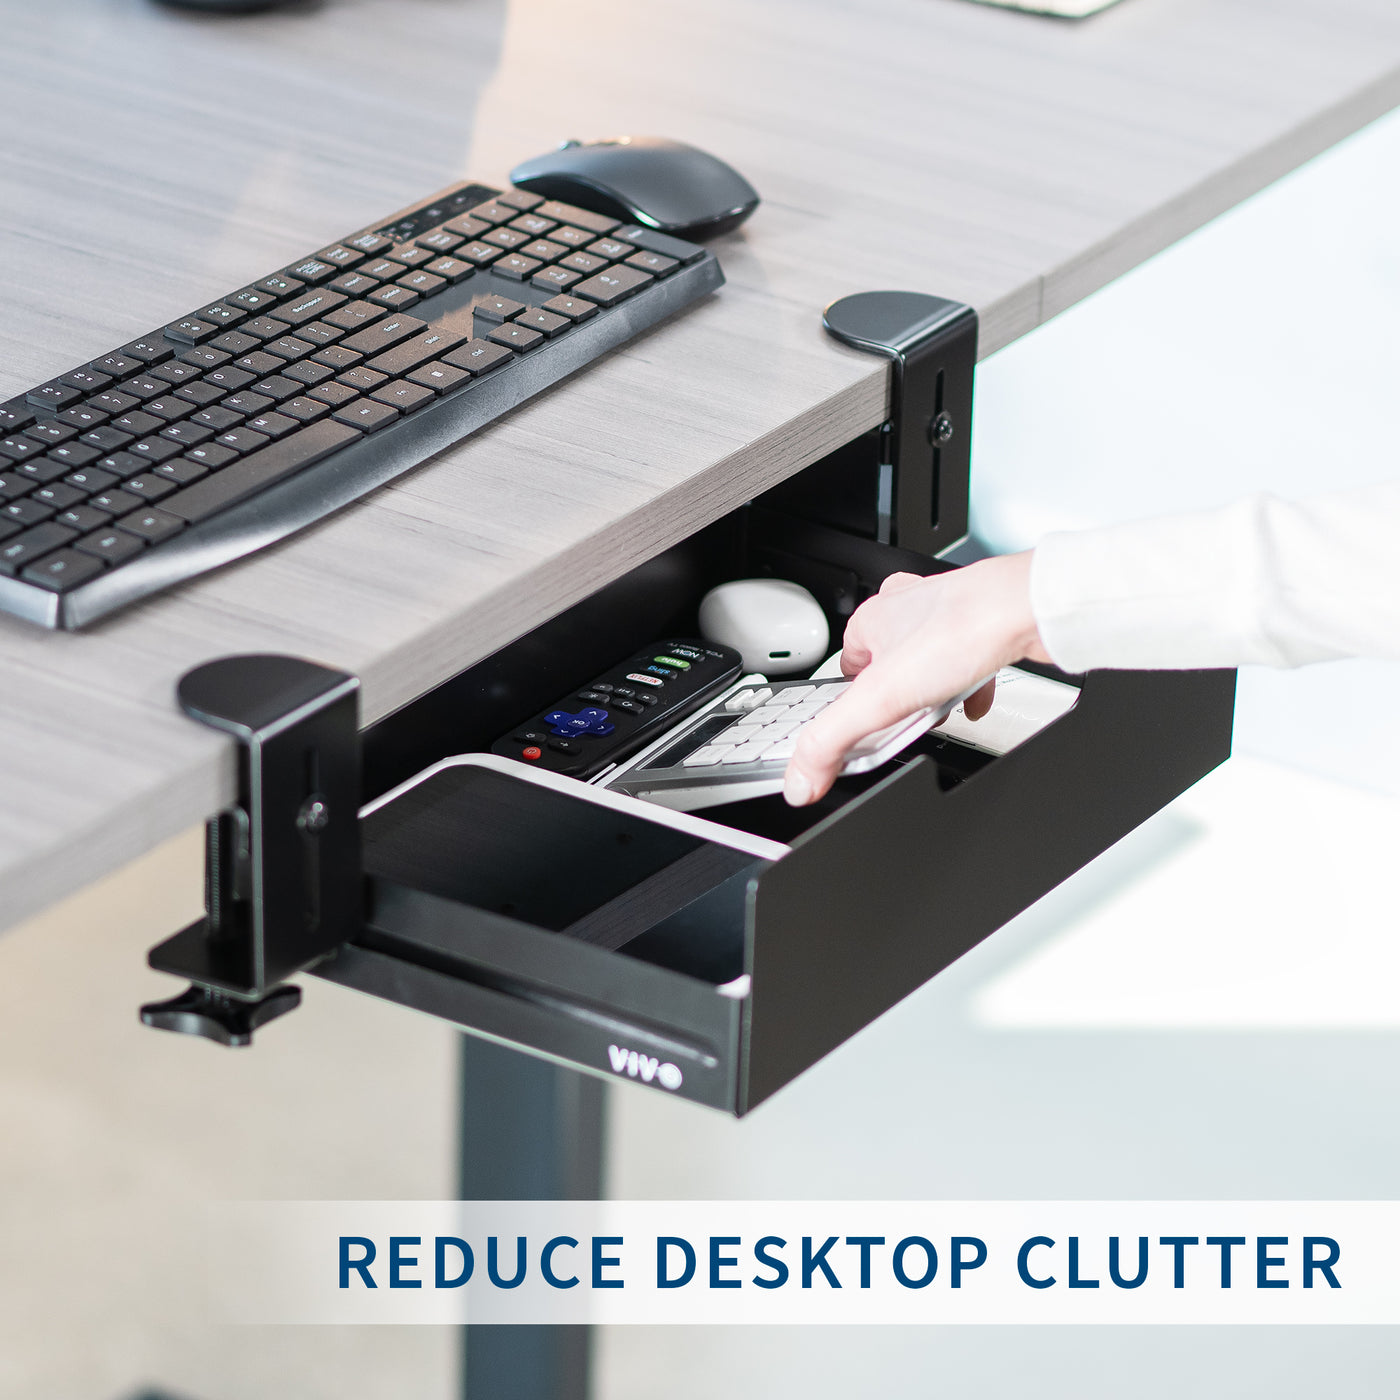 Sturdy low-profile flush under desk clamp-on desk drawer for organization and storage.